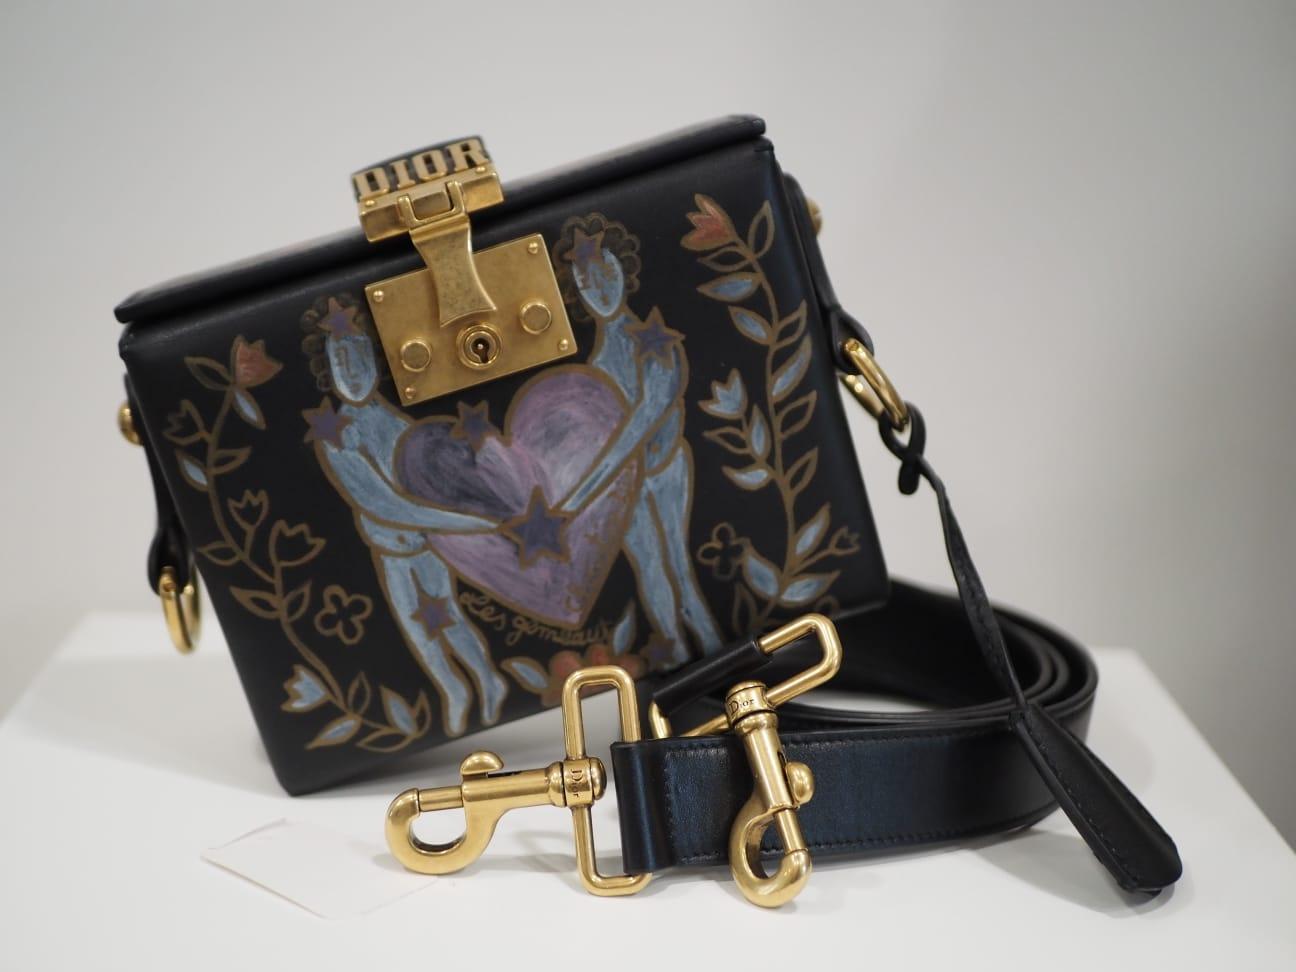 Christian Dior Addict Lockbox Zodiac shoulder bag
Dimensions: Height: 13 cm (5.12 in)Depth: 5 cm (1.97 in)Length: 16 cm (6.3 in)